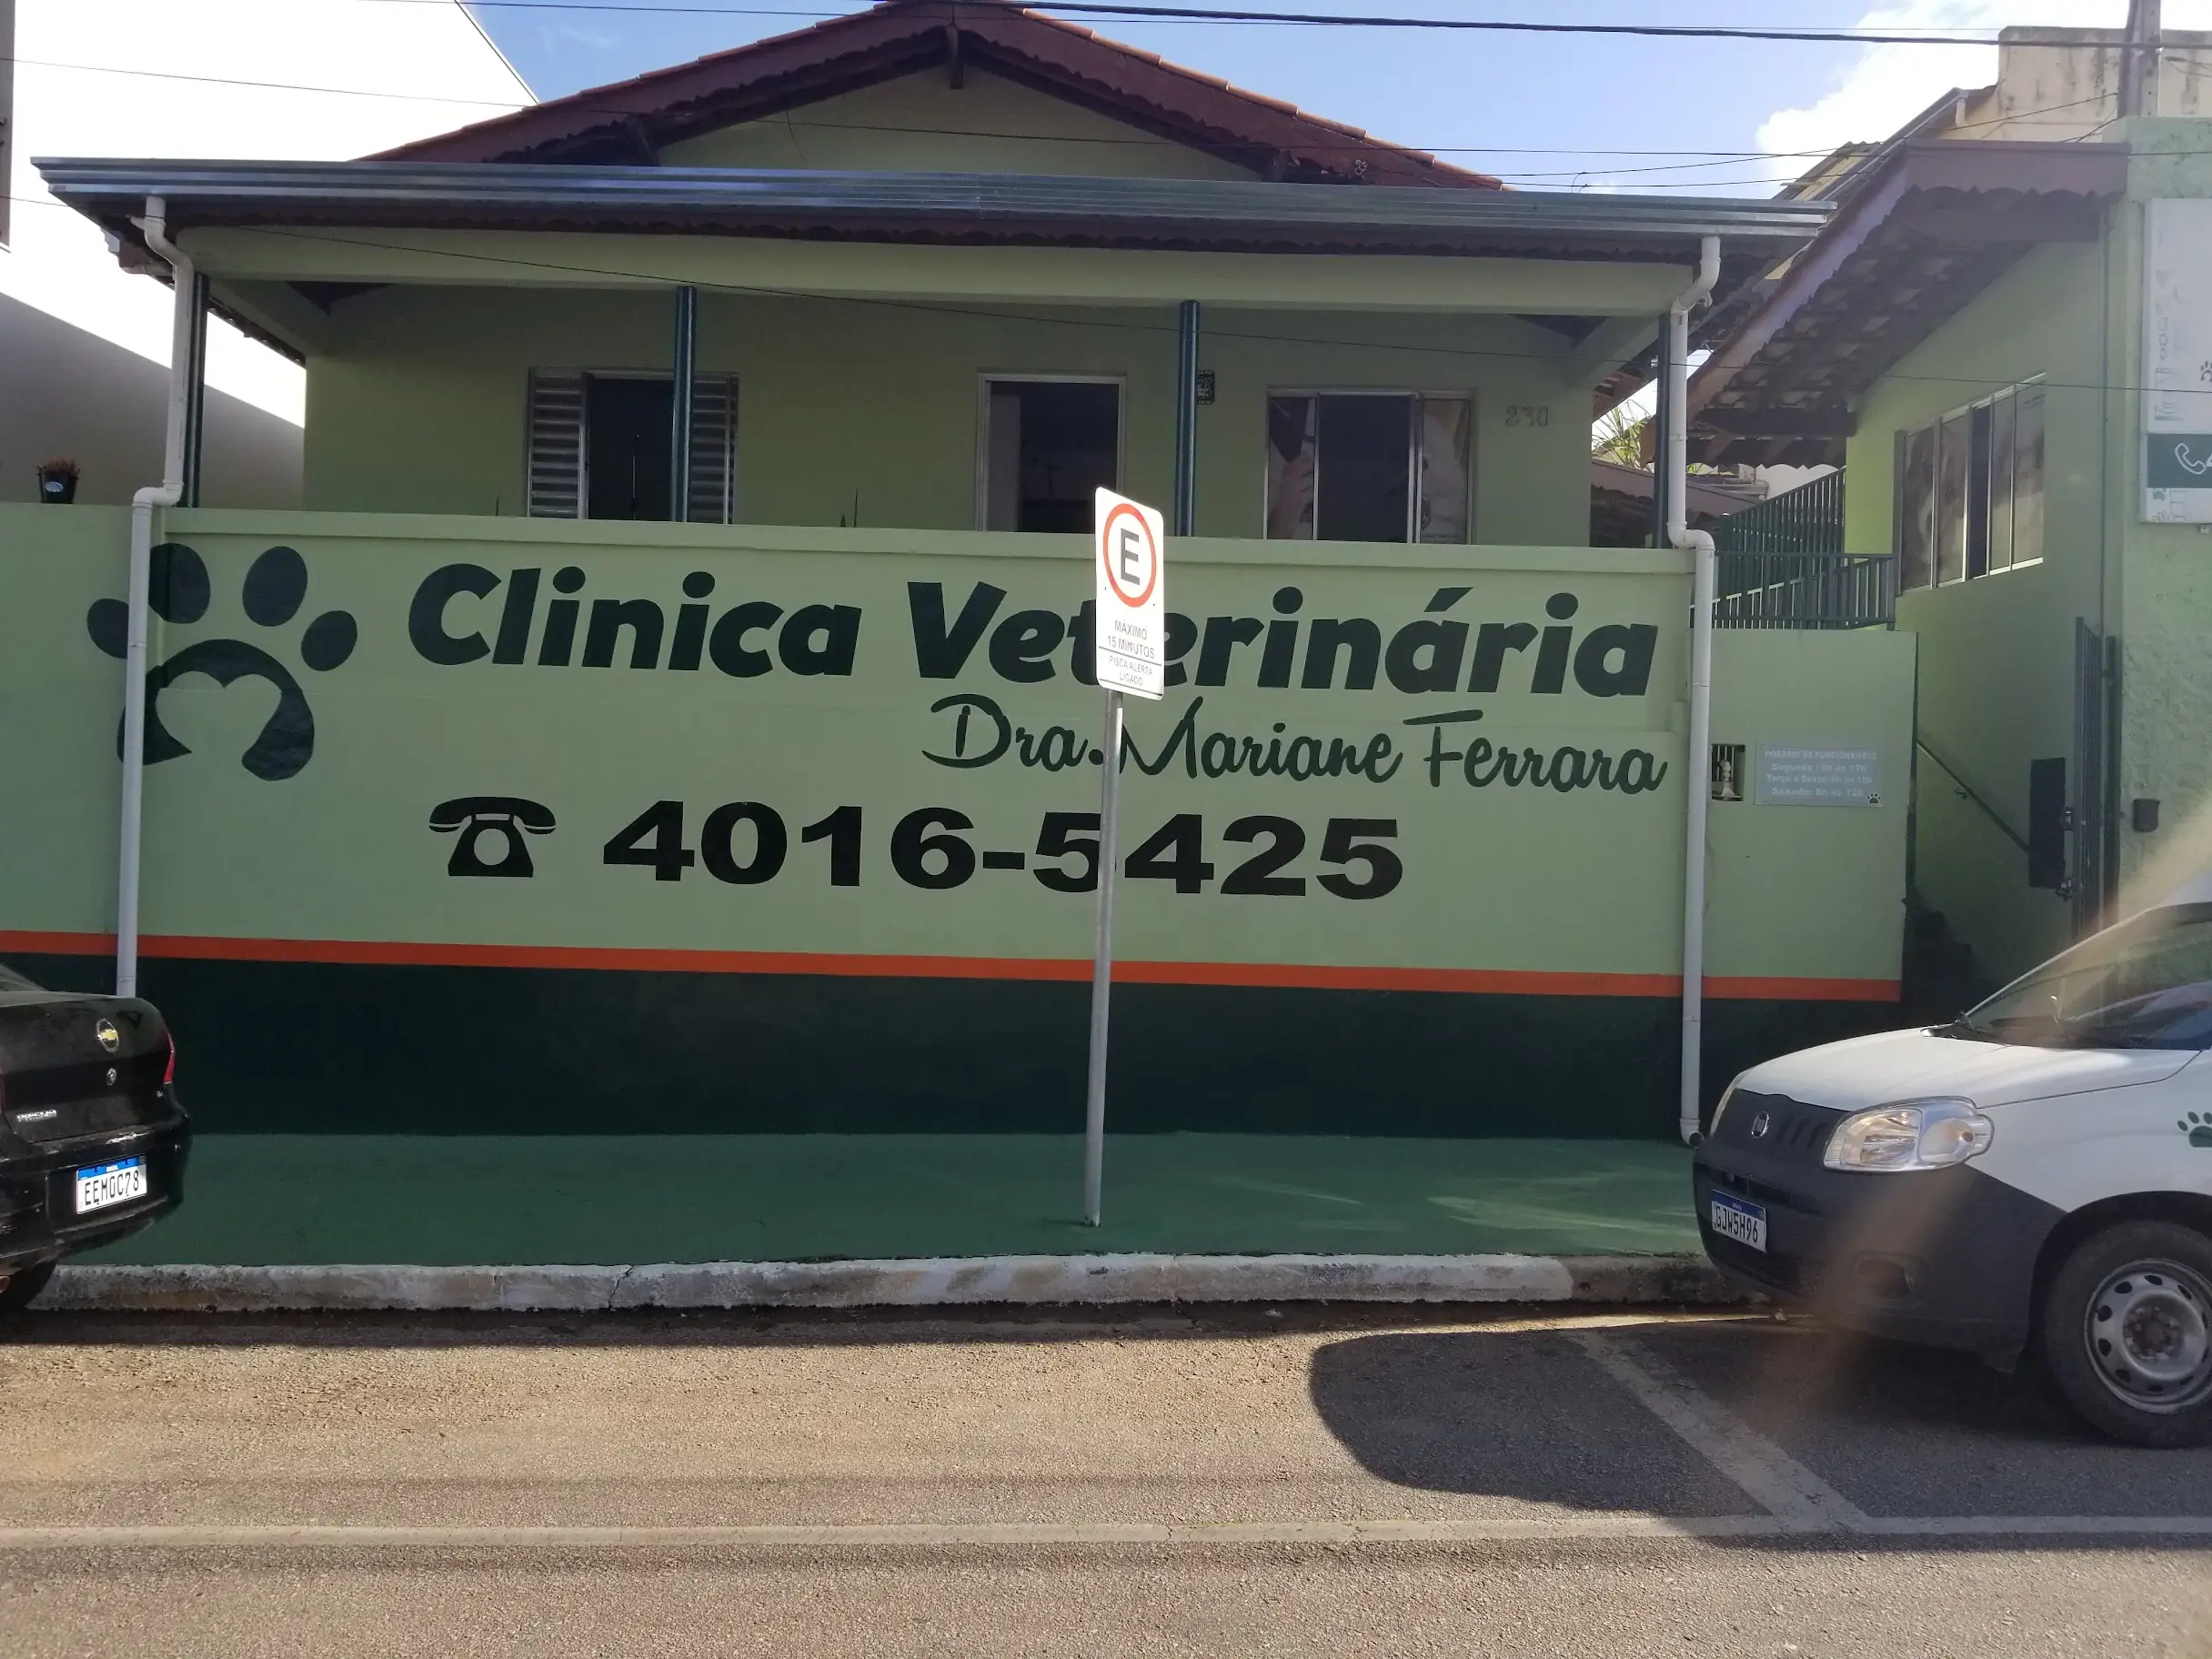 Serviços | Clinica Veterinaria Dra. Mariane Ferrara